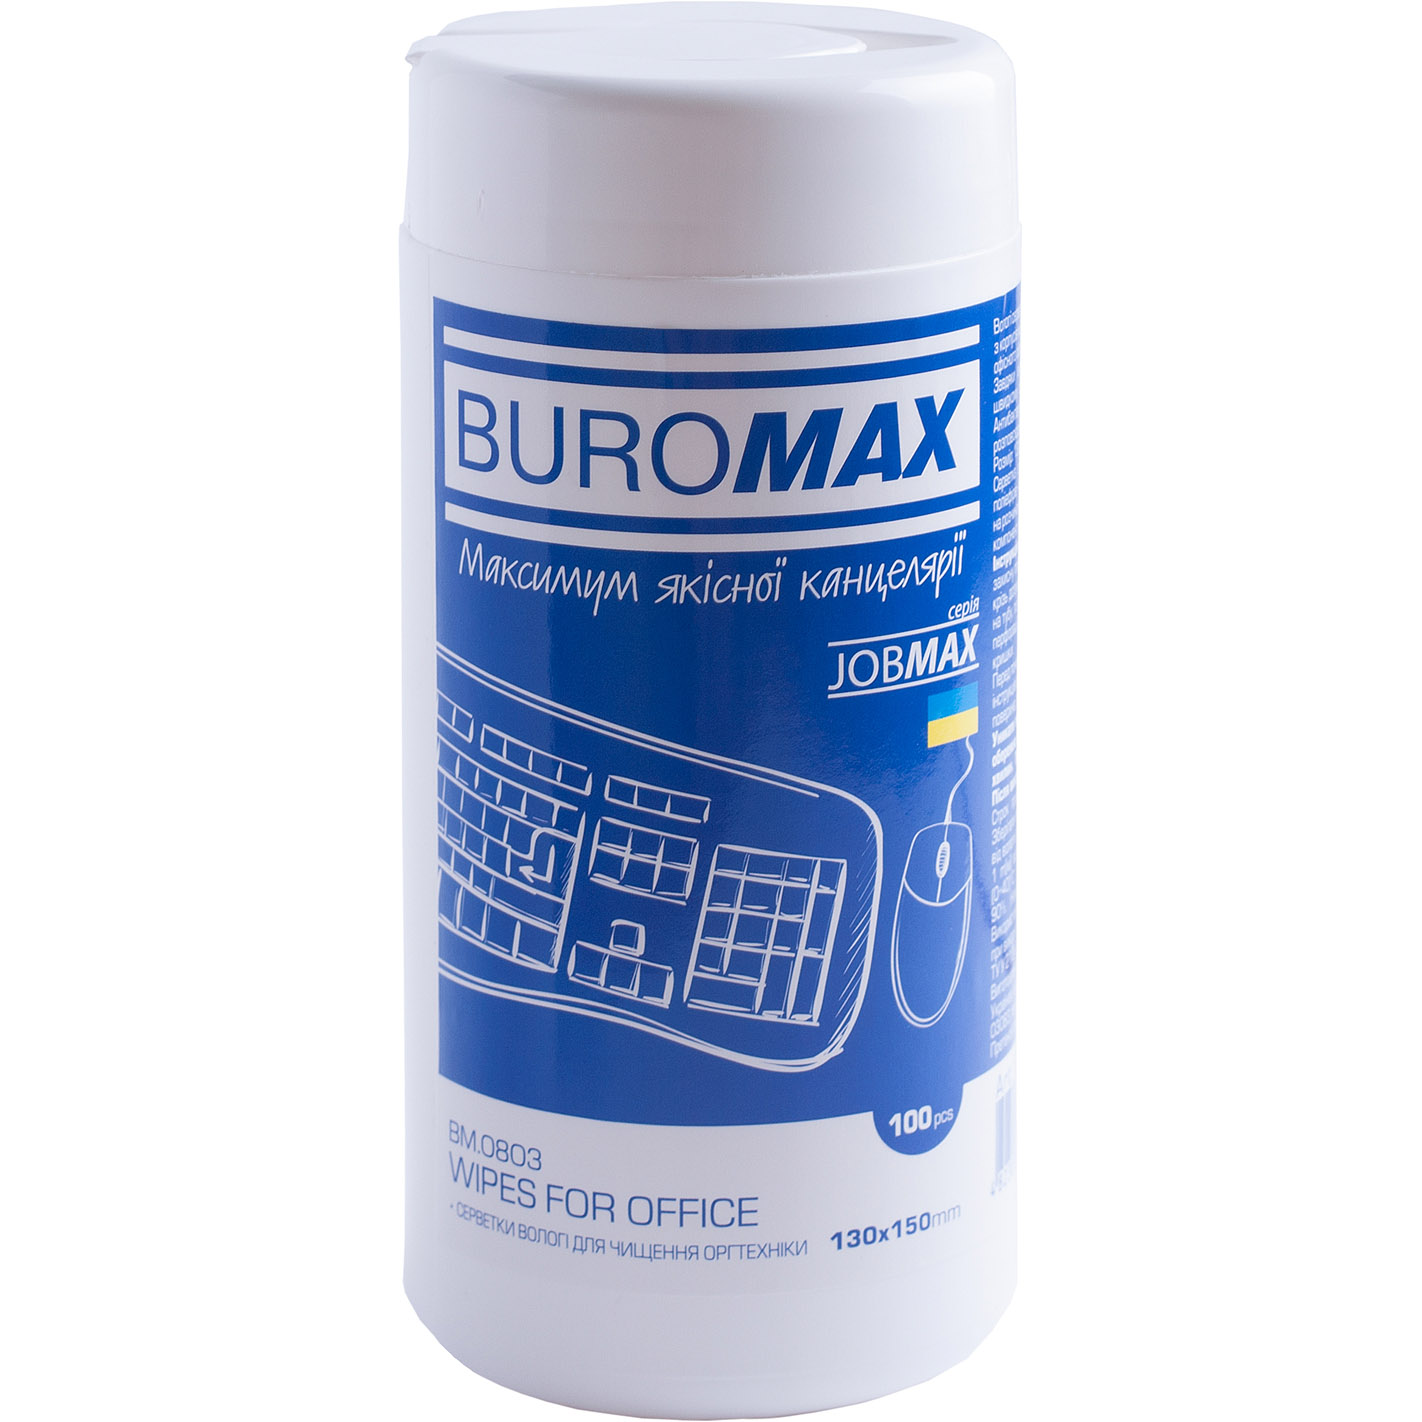 Салфетки для оргтехники, пластика, офисной мебели Buromax Jobmax 100 шт. в тубе (BM.0803) - фото 1